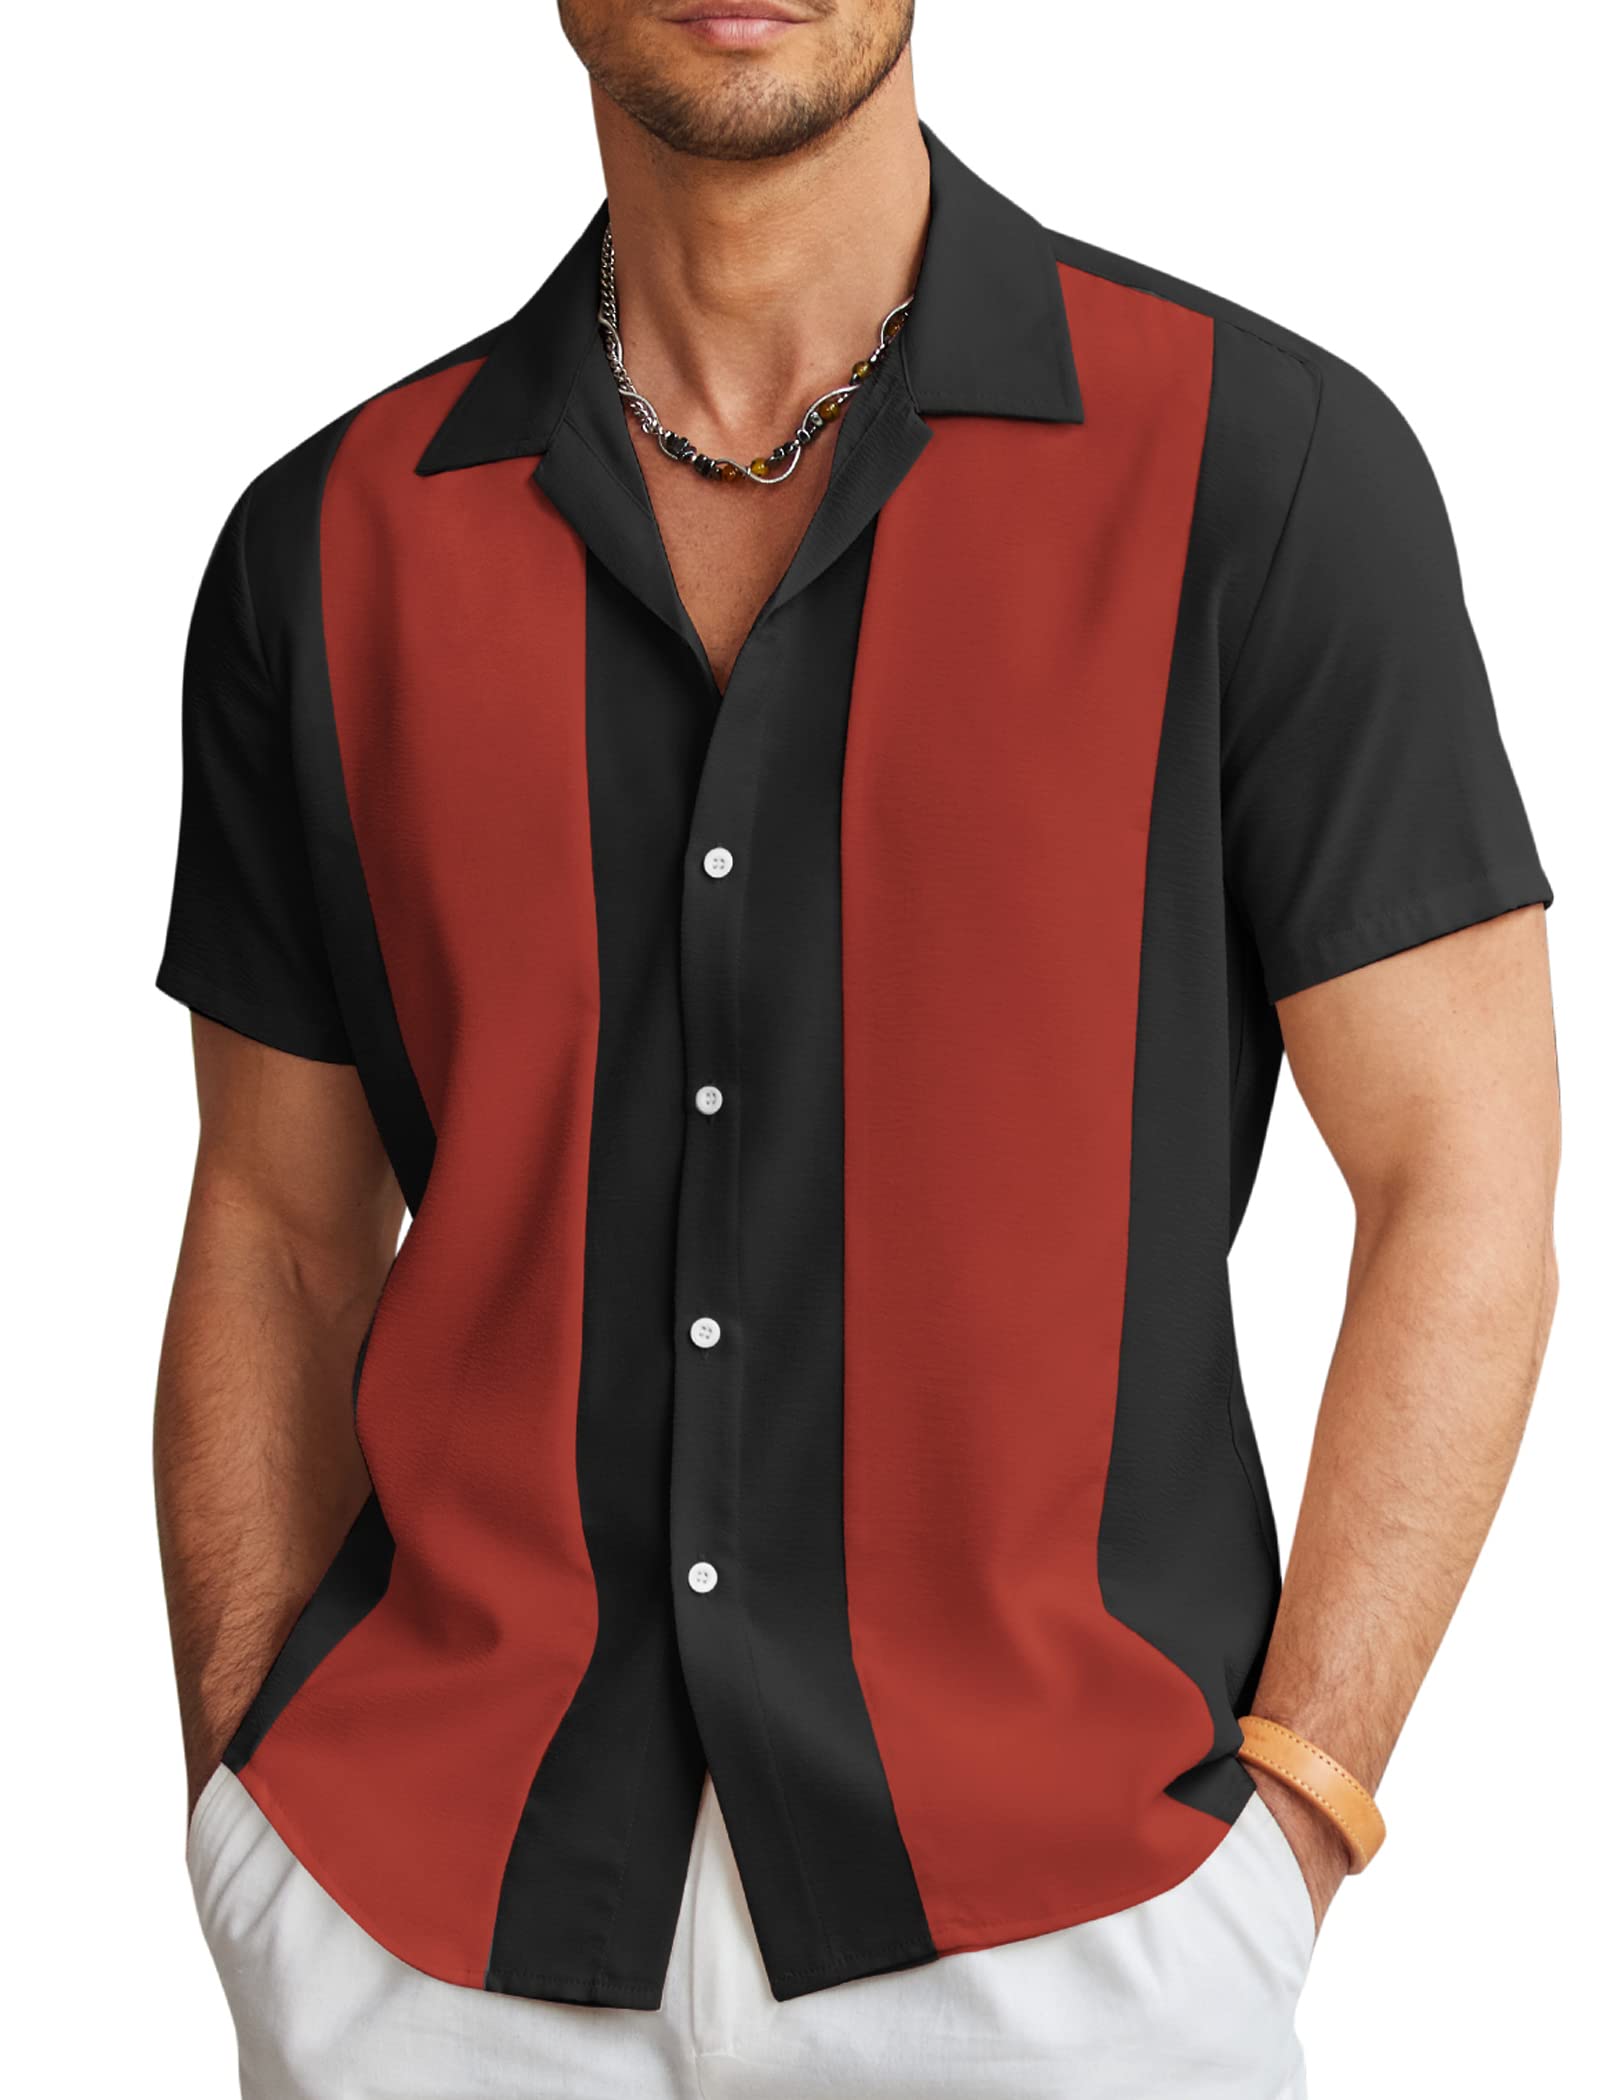 COOFANDY Men's Vintage Bowling Shirt Short Sleeve Button Down